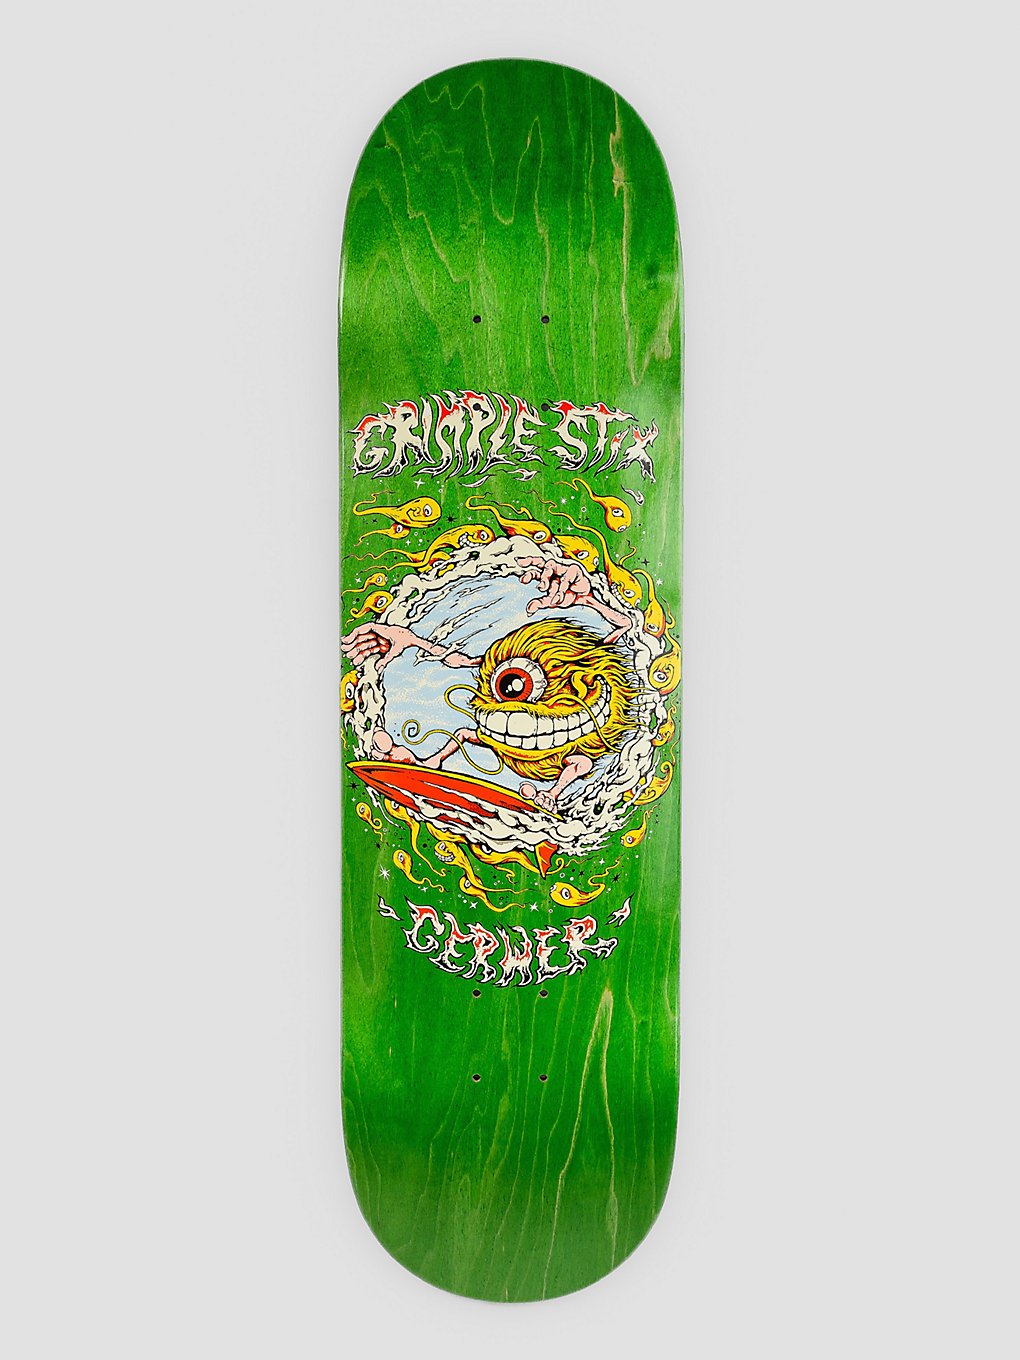 Antihero Gerwer Grimple Stix Zapped 8.4 Skateboard Deck assorted